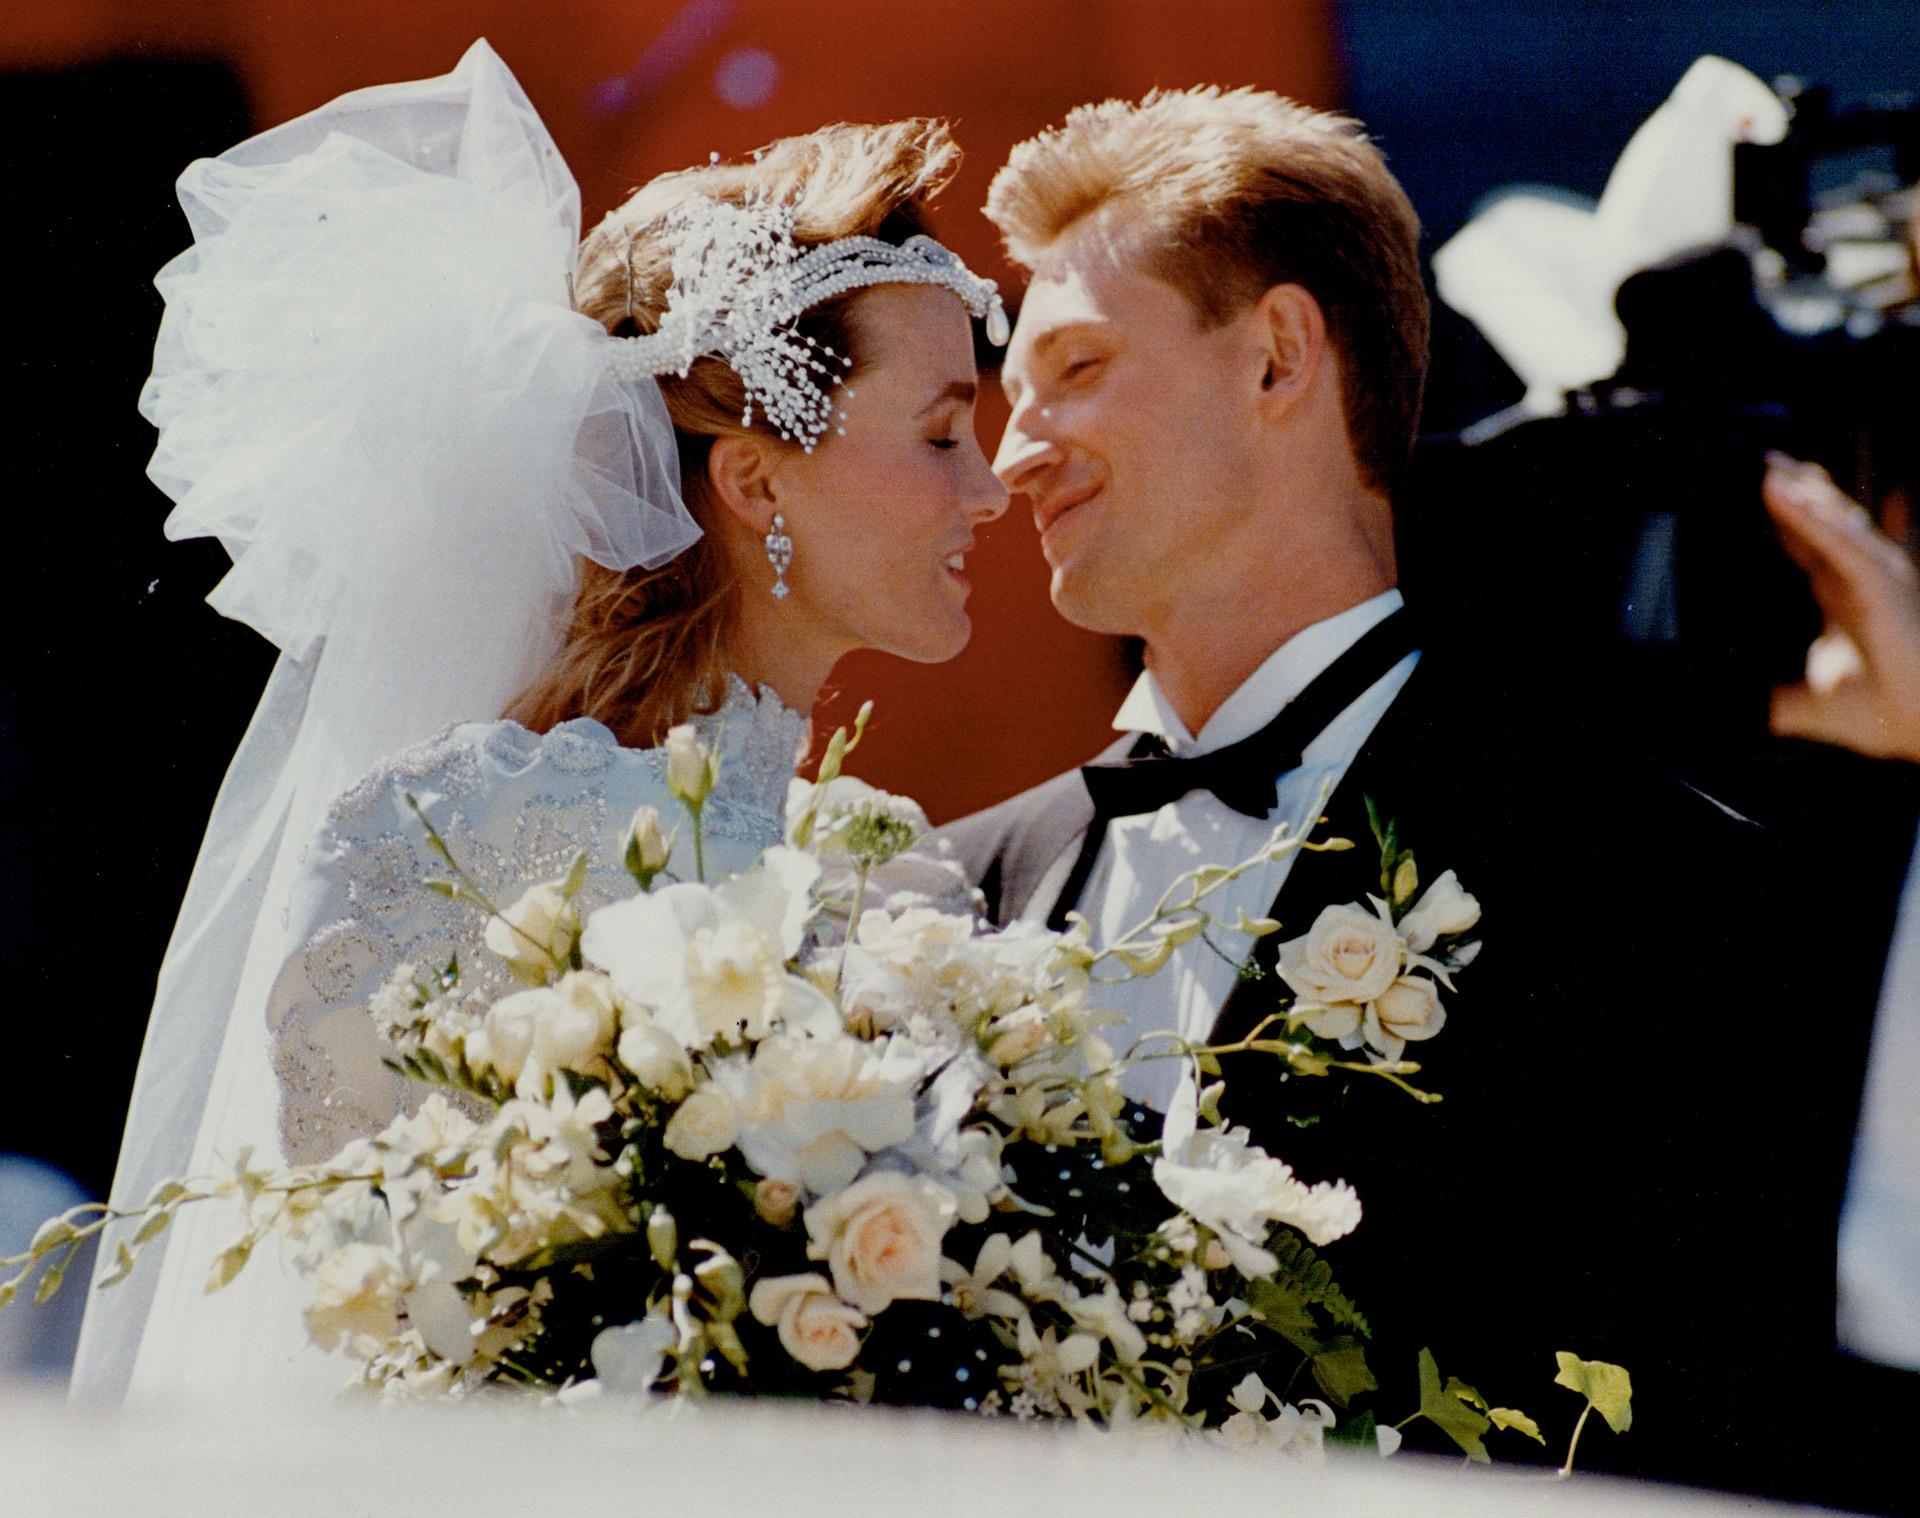 Wayne Gretzky's royal wedding